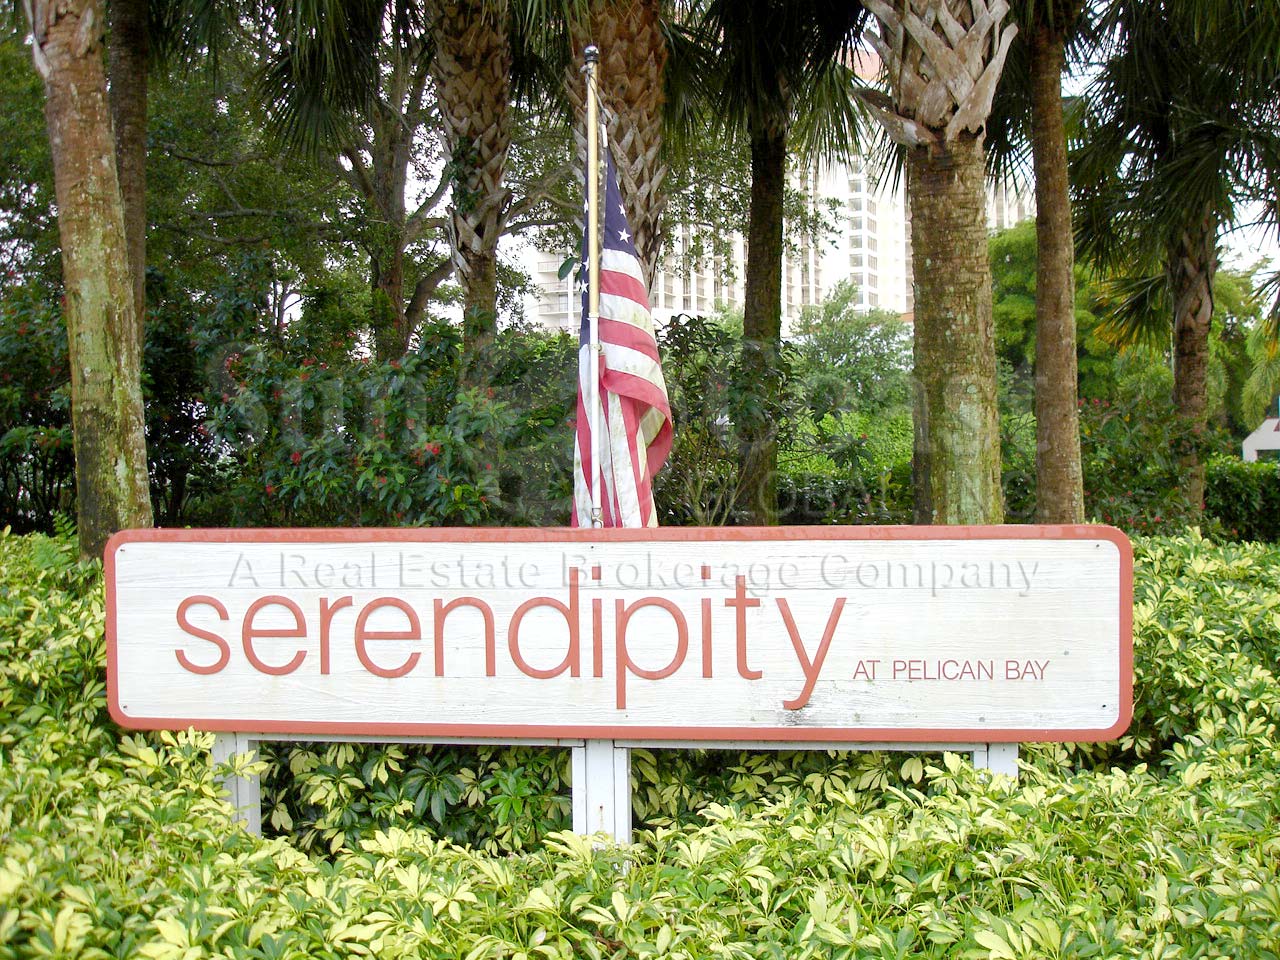 Serendipity at Pelican Bay sign